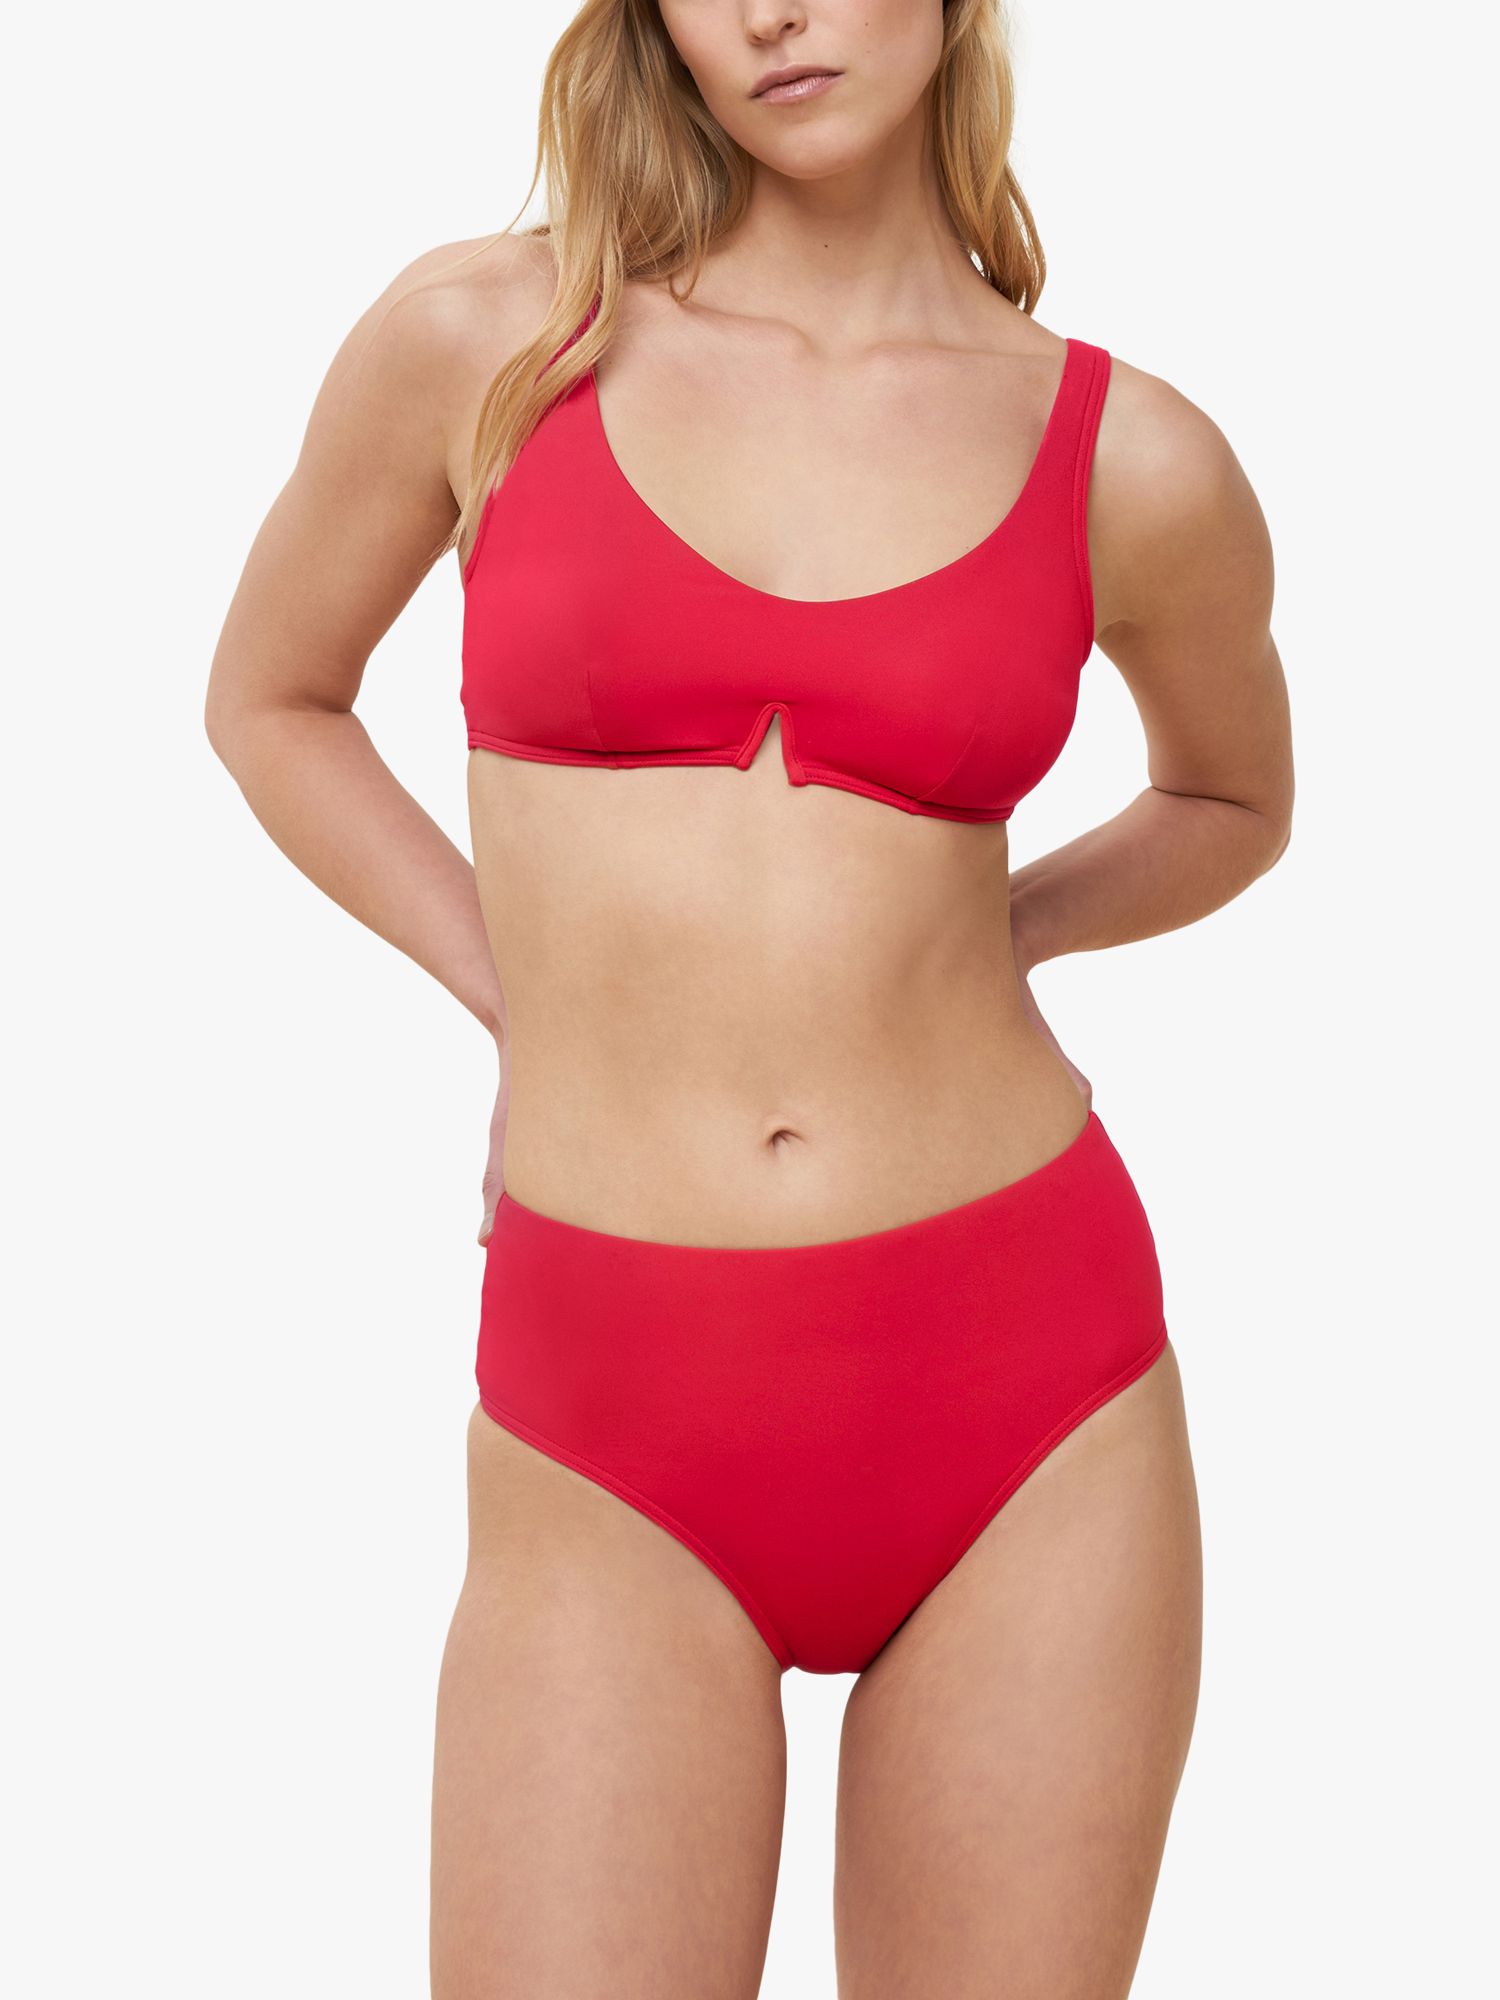 Triumph Flex Smart Summer Bikini Bottoms, Bright Red, XL